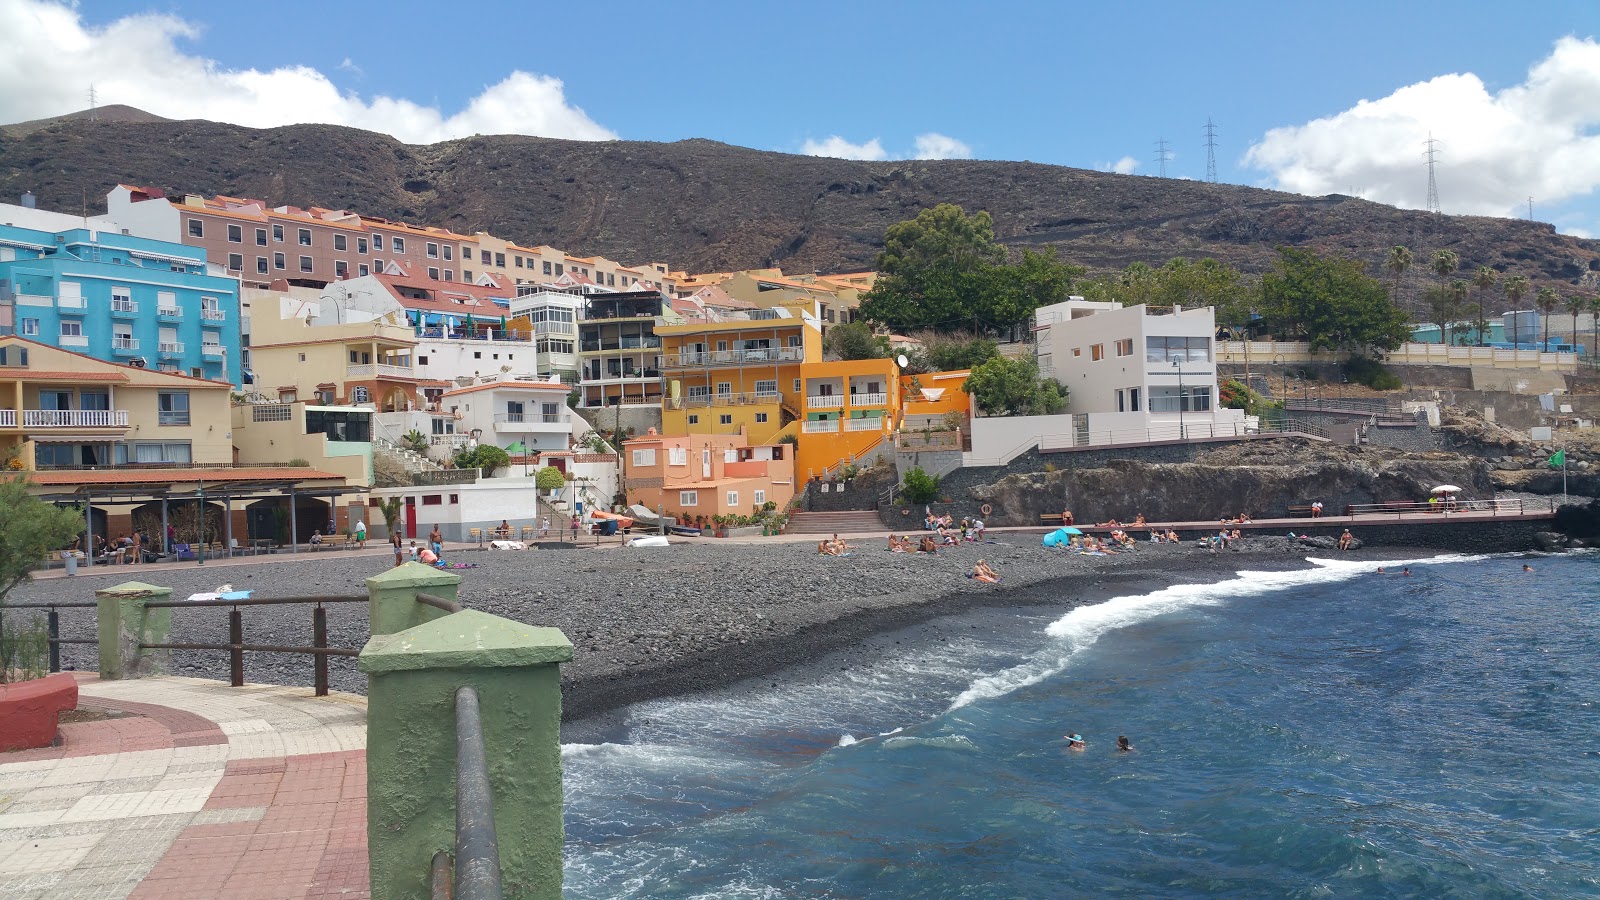 Photo of Playa Las Caletillas with small multi bays